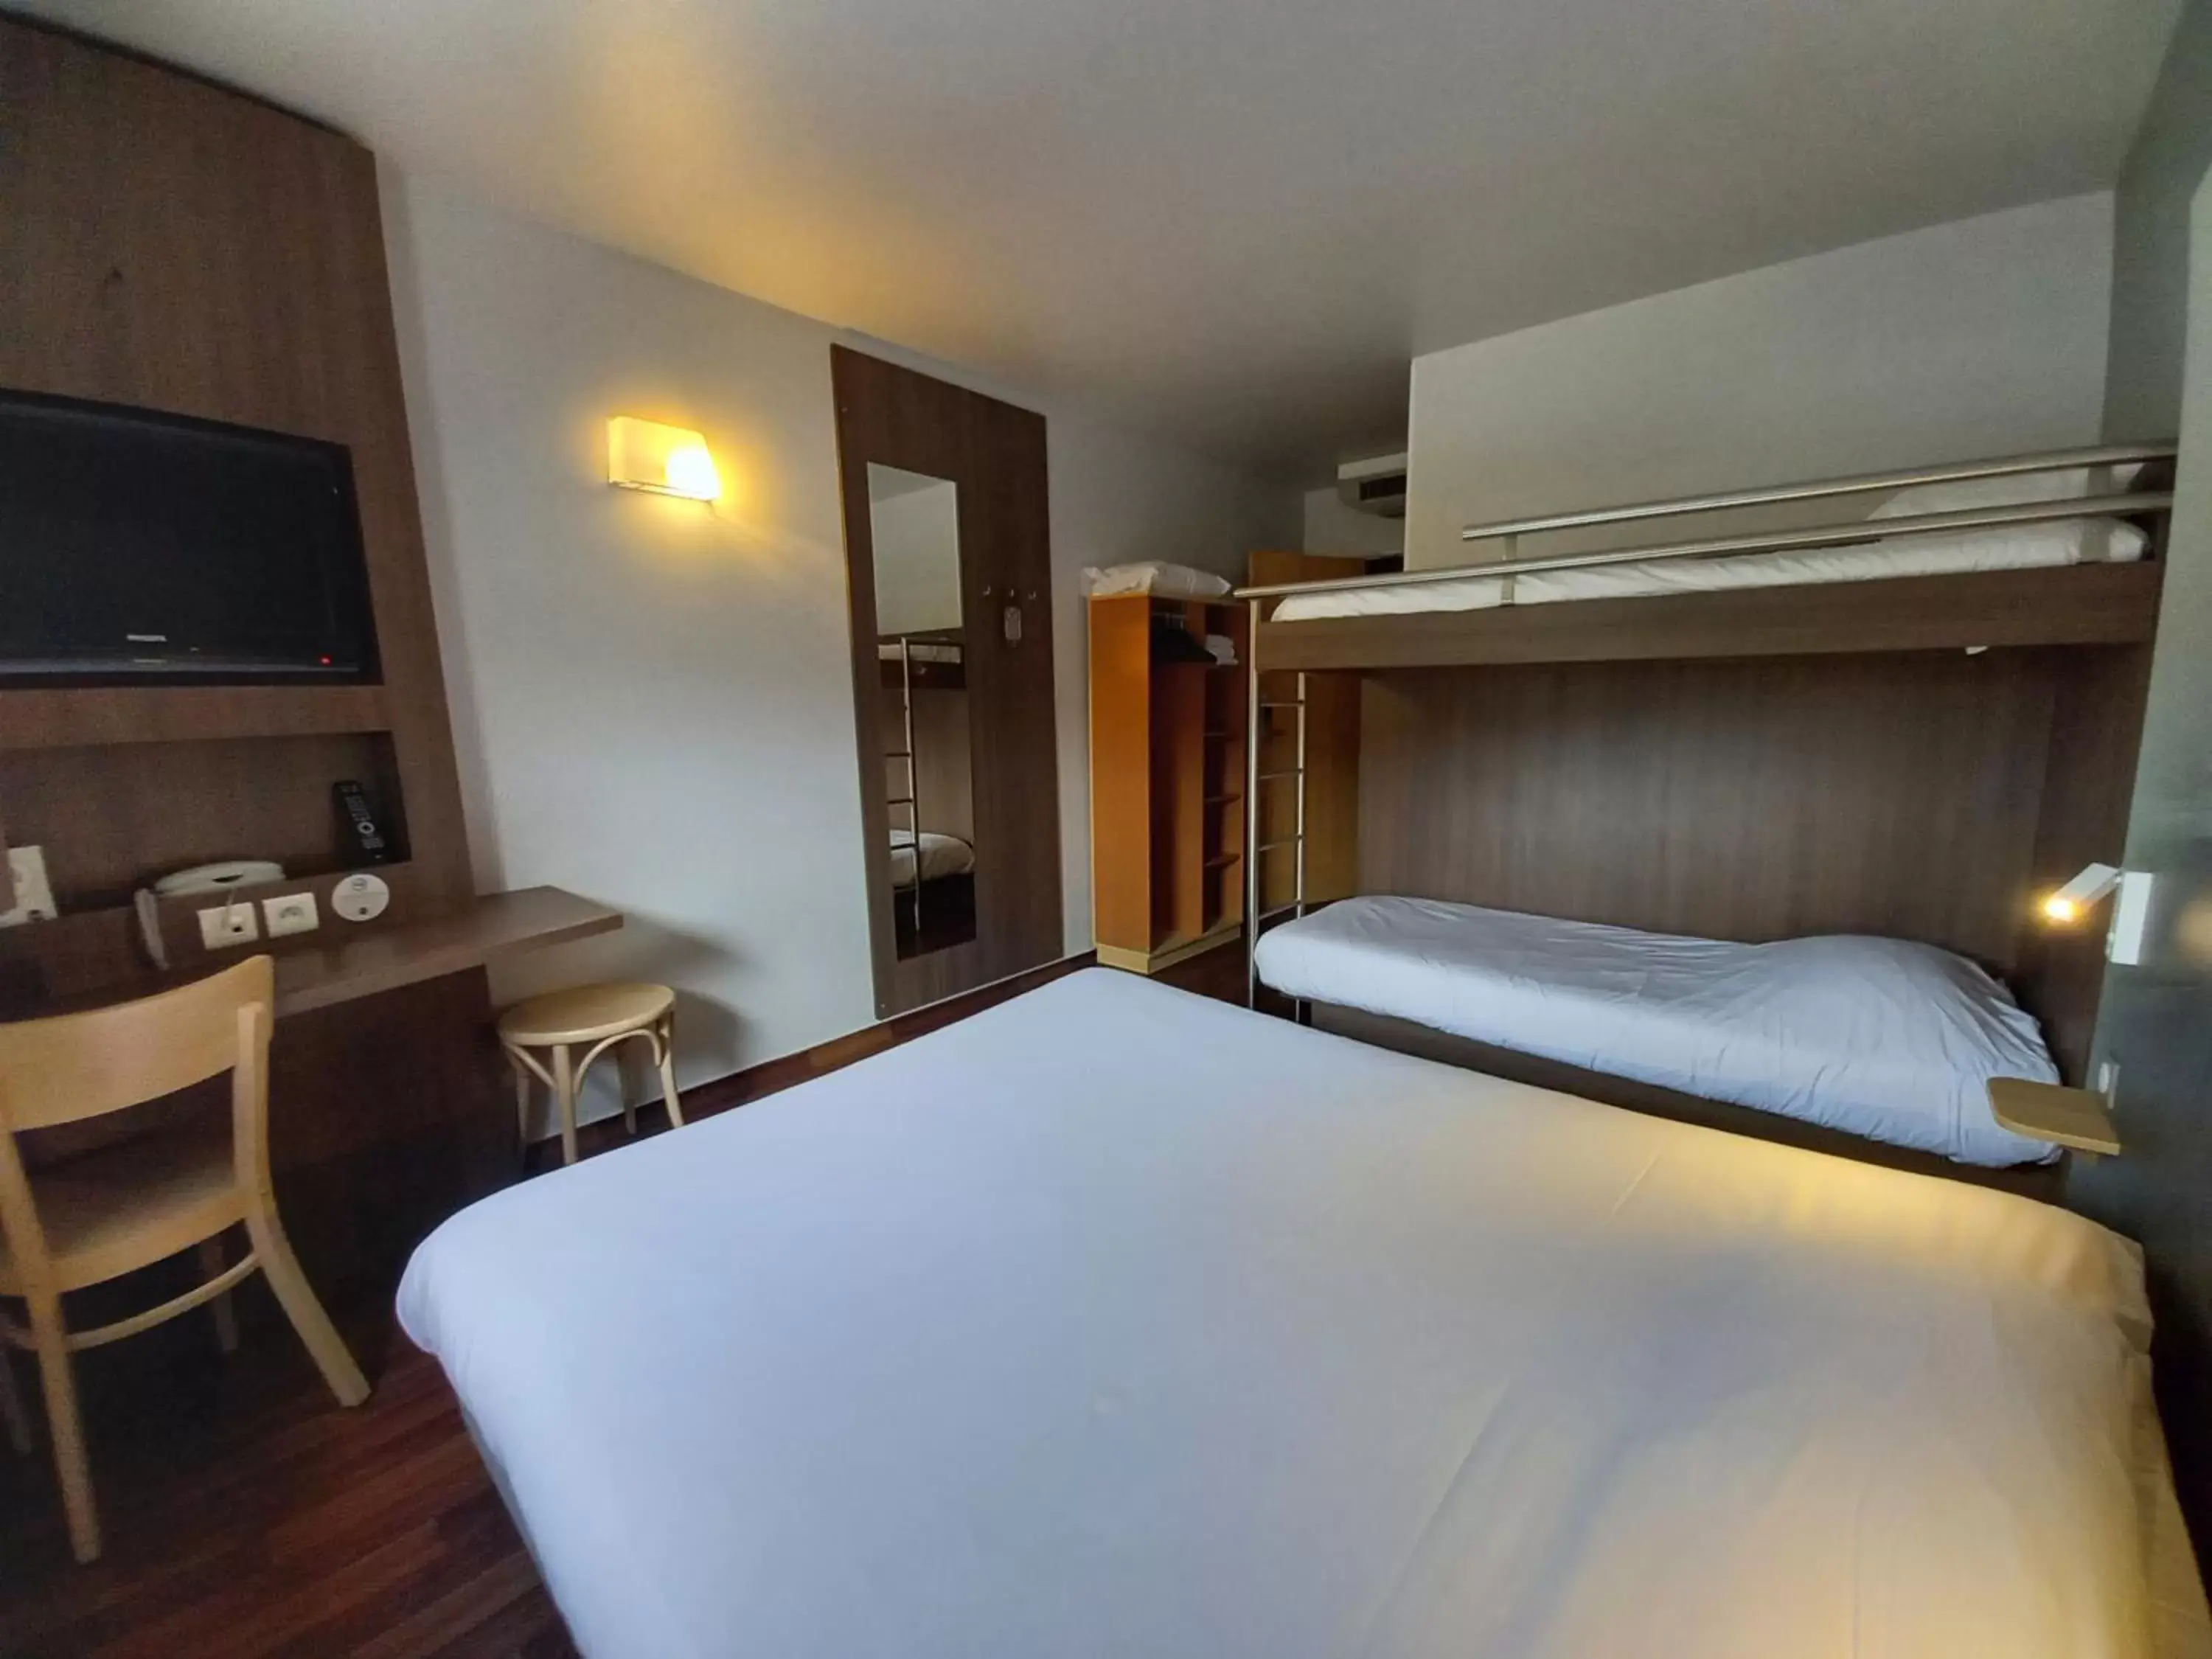 Bed, Room Photo in B&B HOTEL Saint-Etienne Monthieu